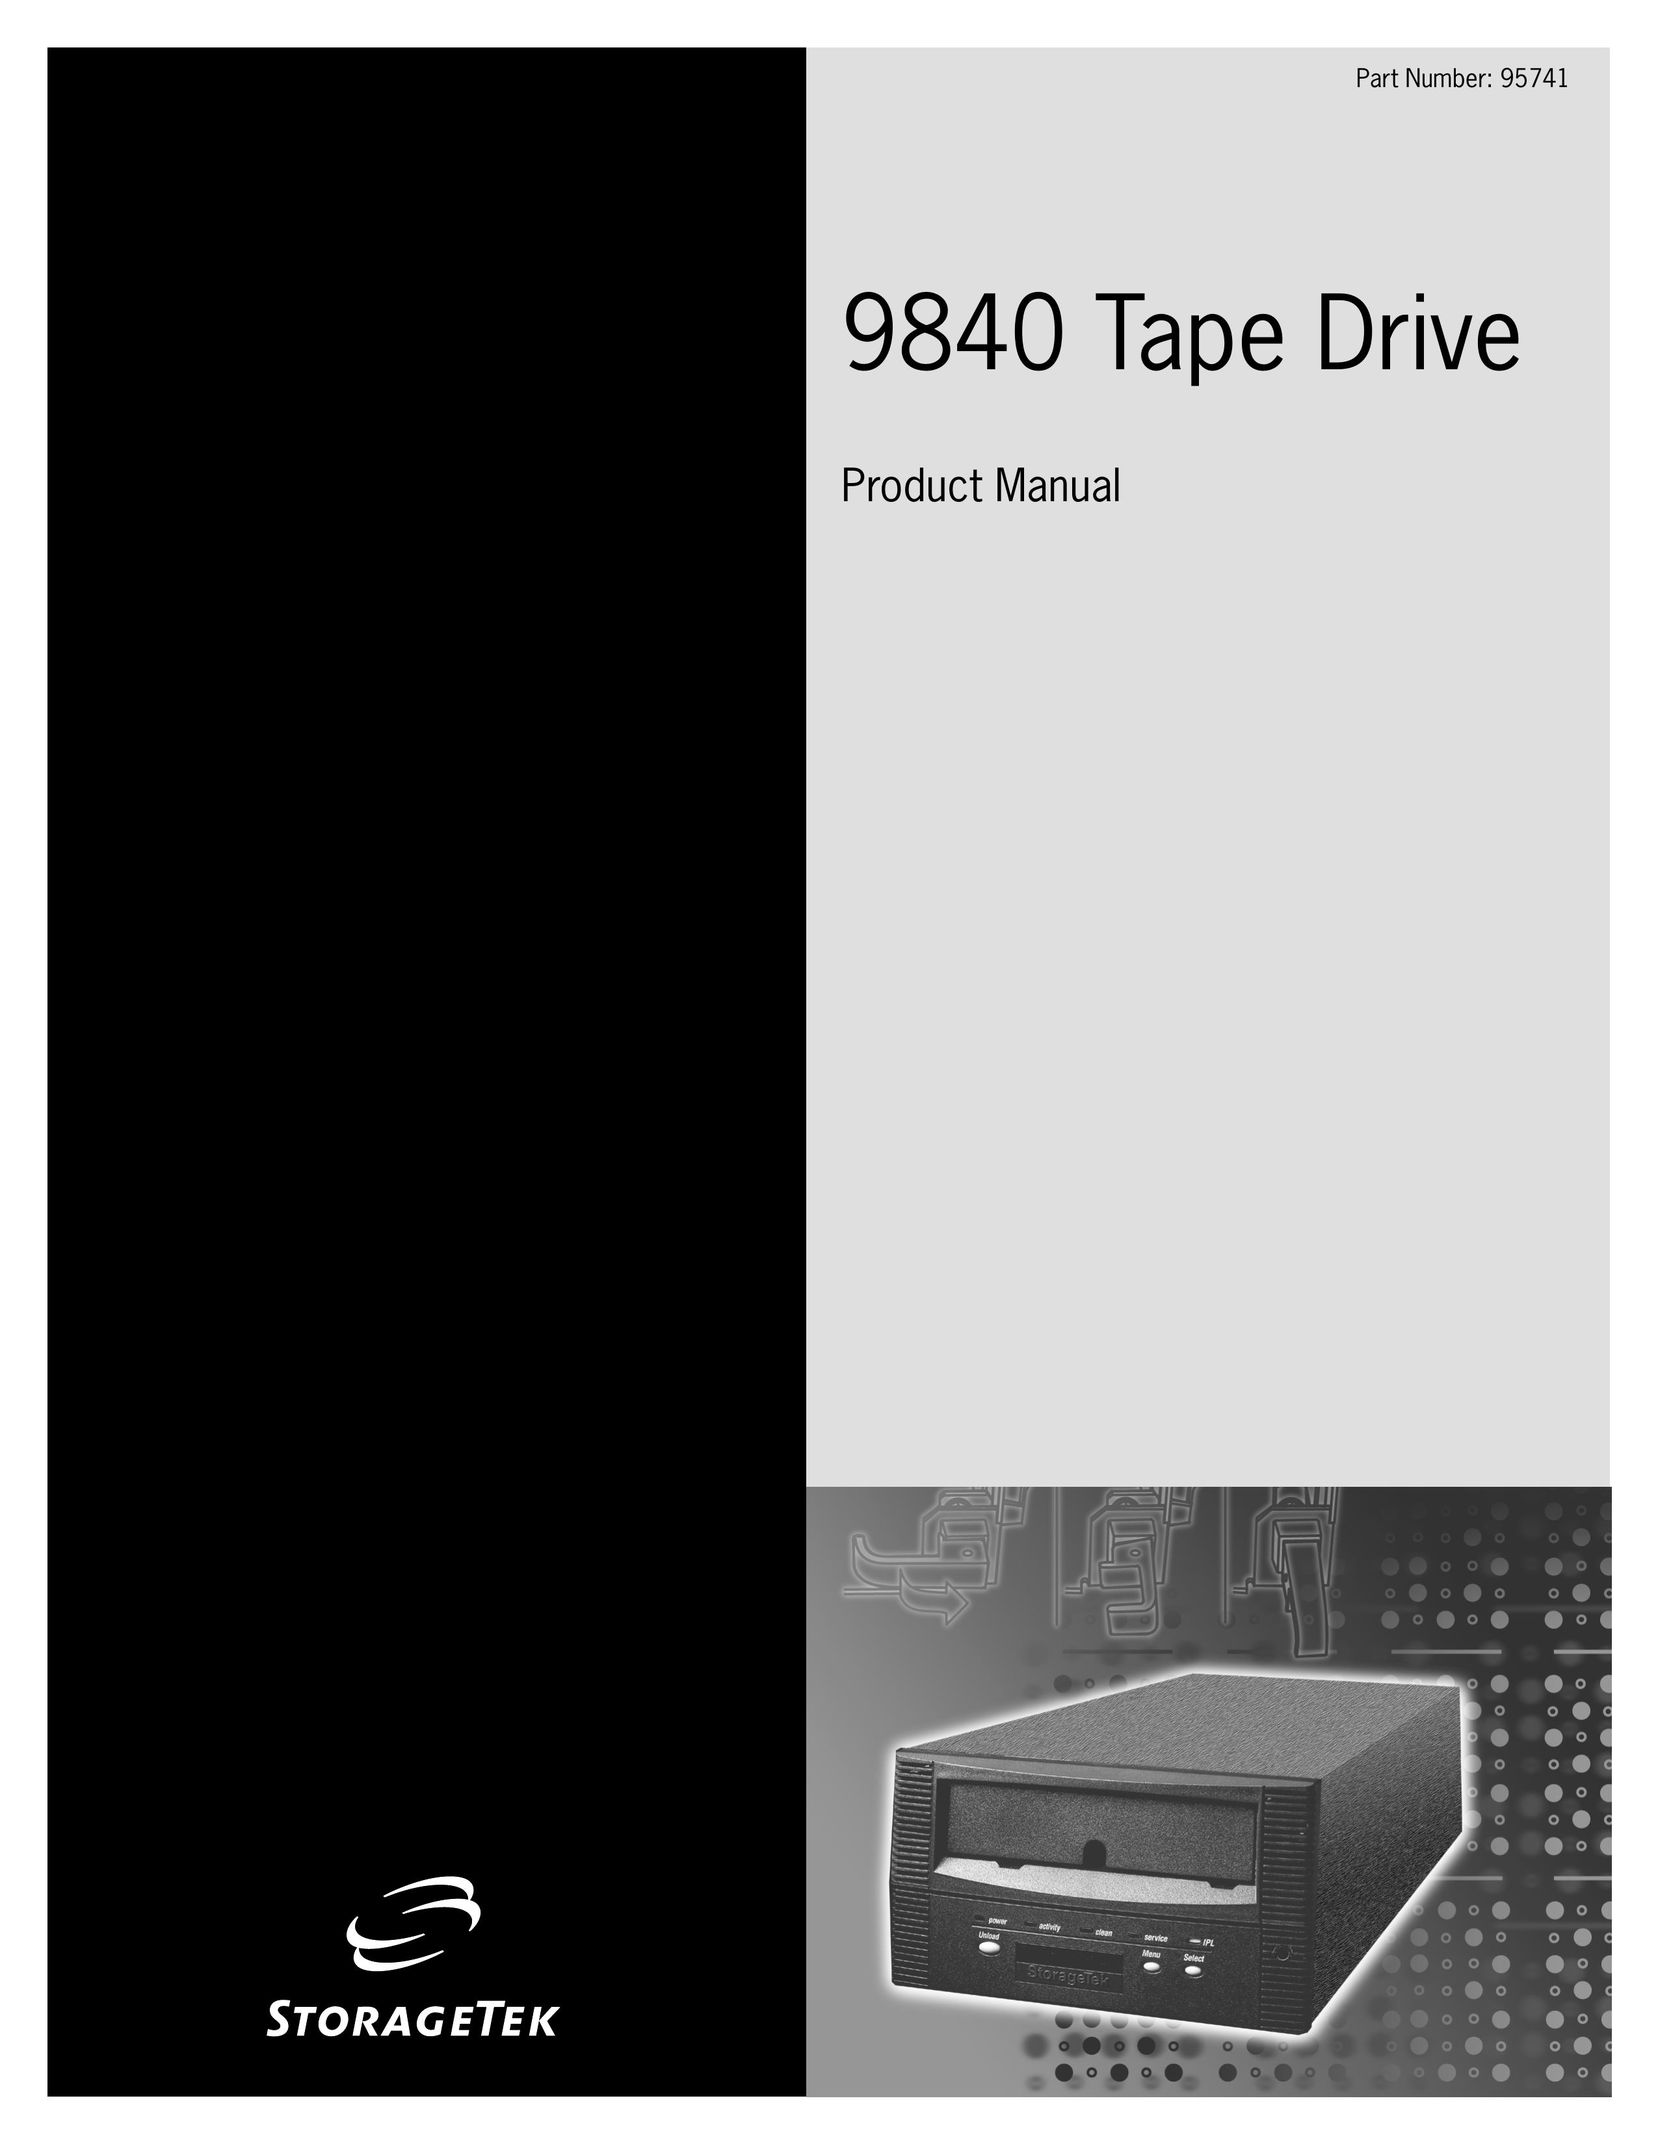 StorageTek 9840 Car Stereo System User Manual